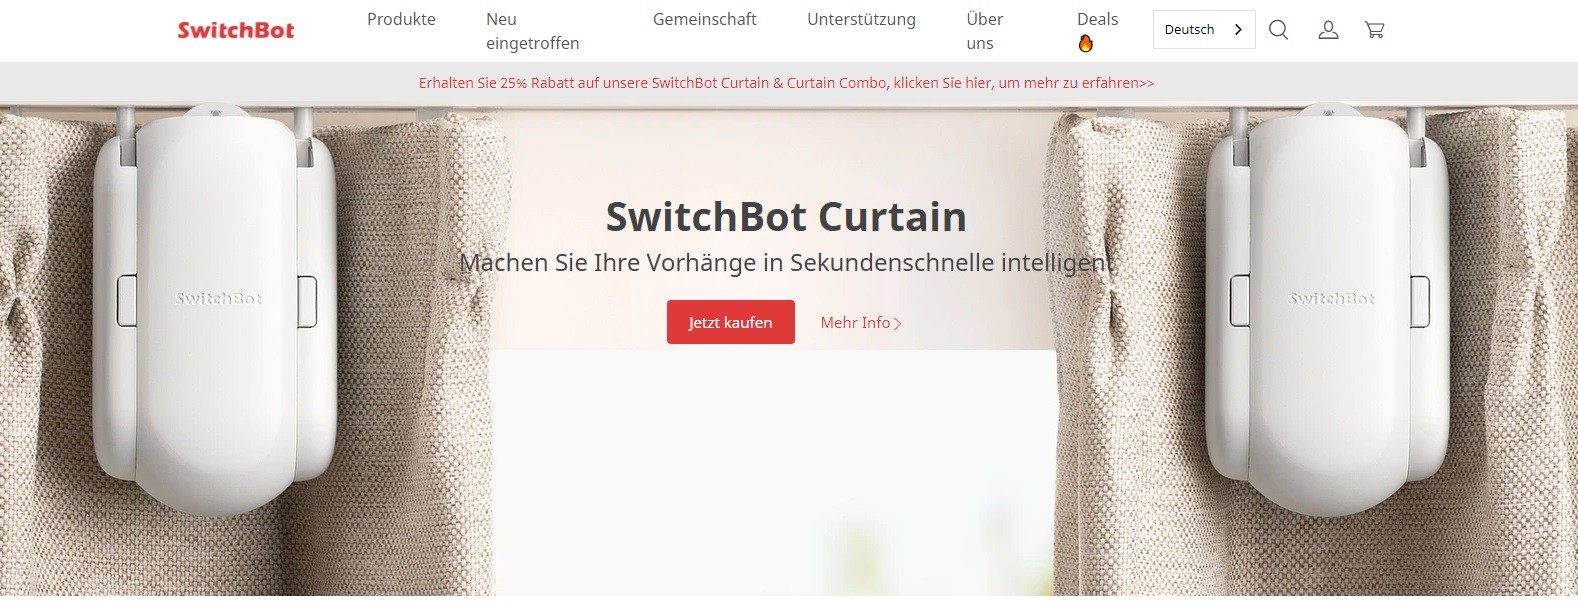 SwitchBot Startseite